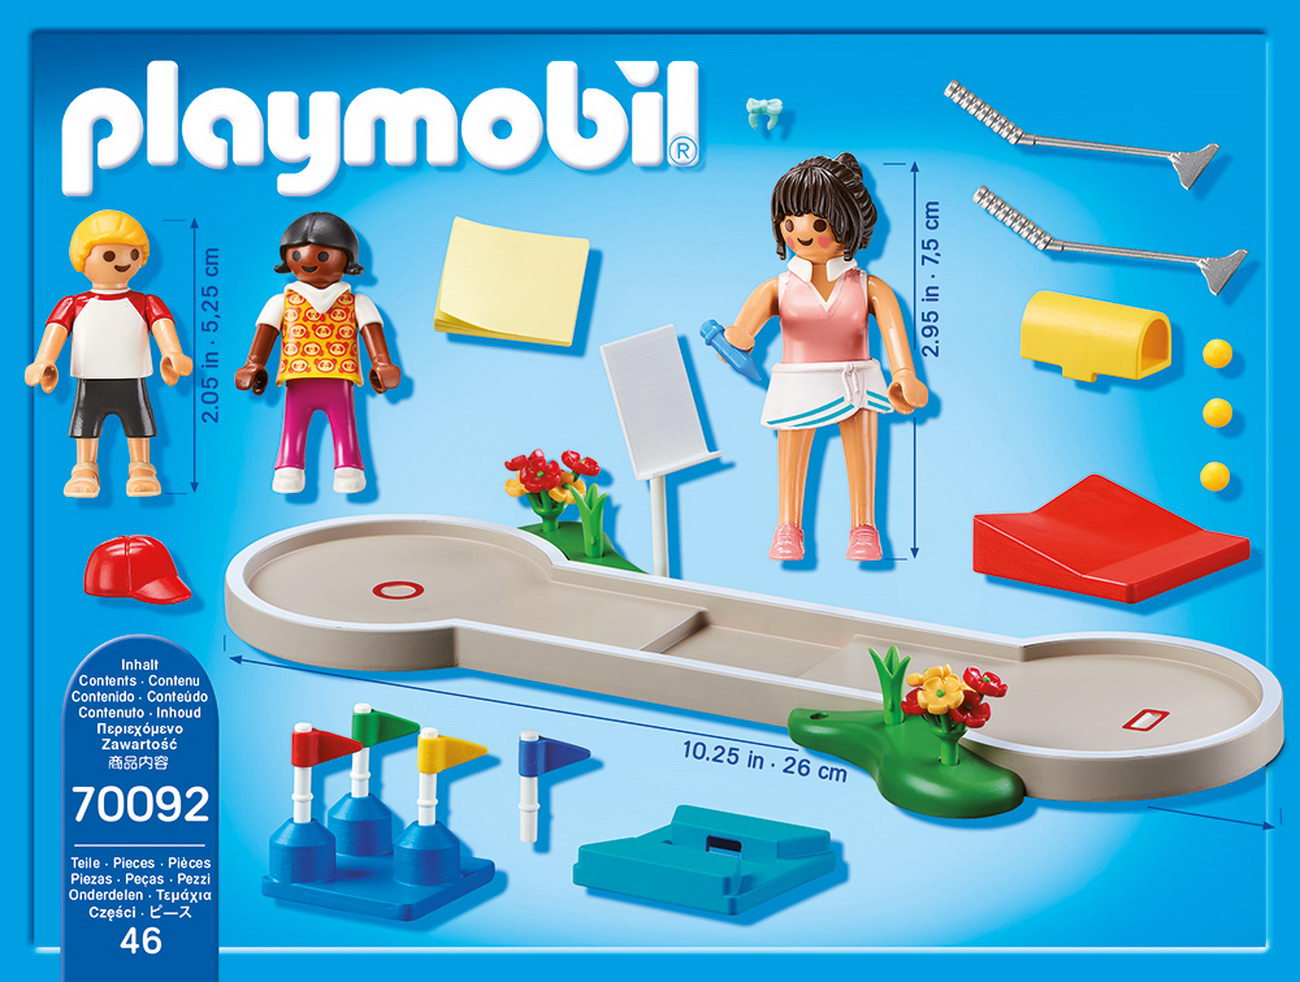 Playmobil 70092 - Minigolf (Family Fun)